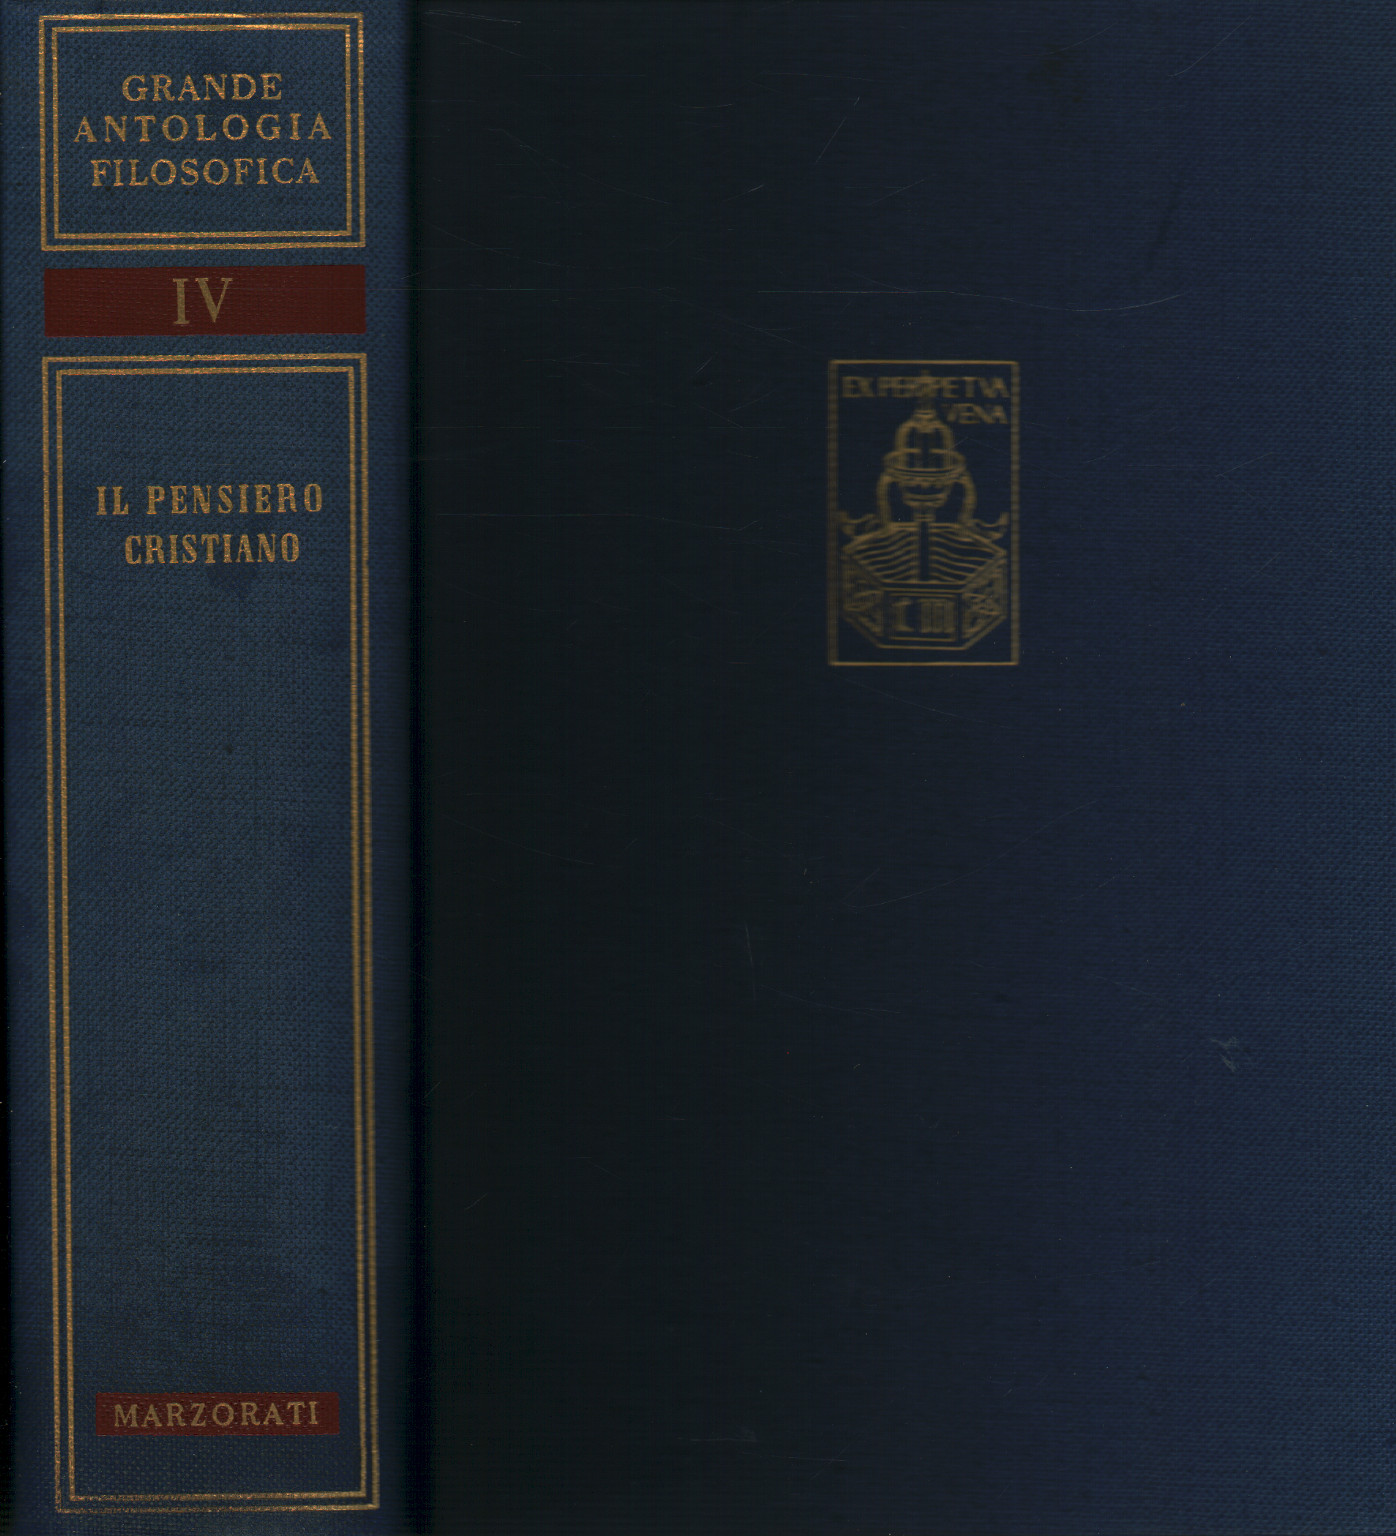 Grande antologia filosofica Volume IV, AA.VV.